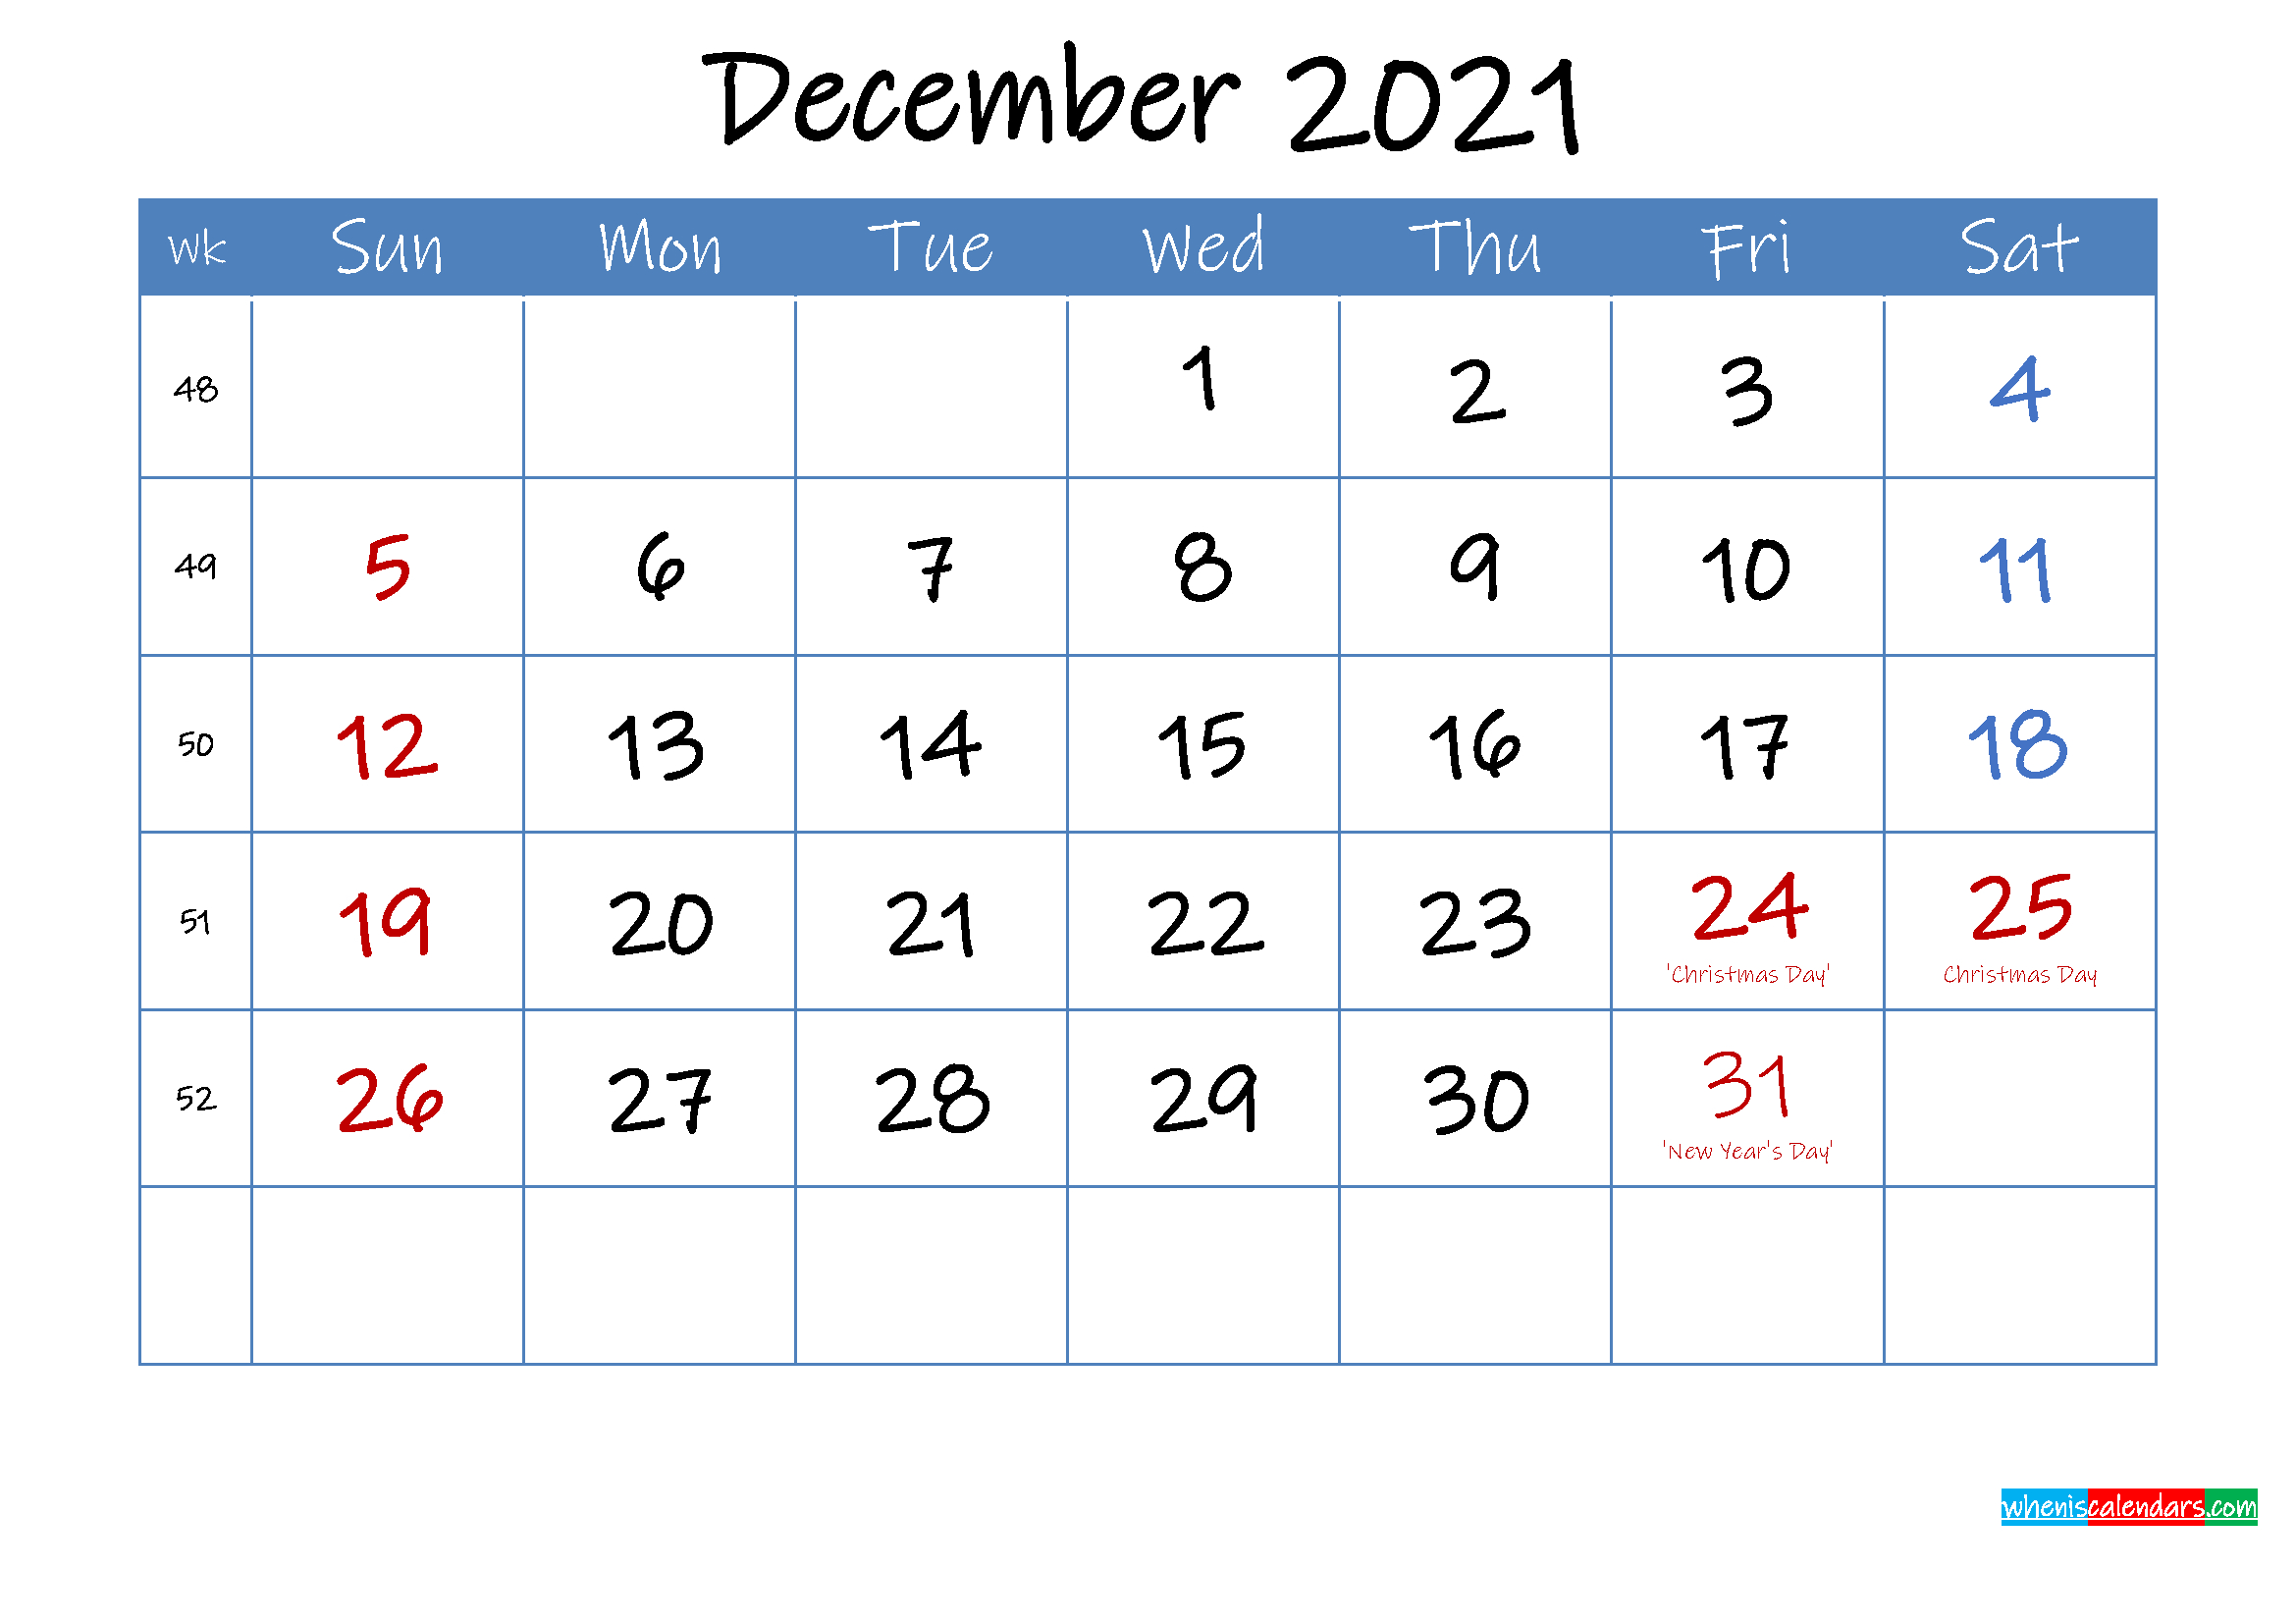 Printable December 2021 Calendar Word - Template Ink21M24 December 2021 Monthly Calendar